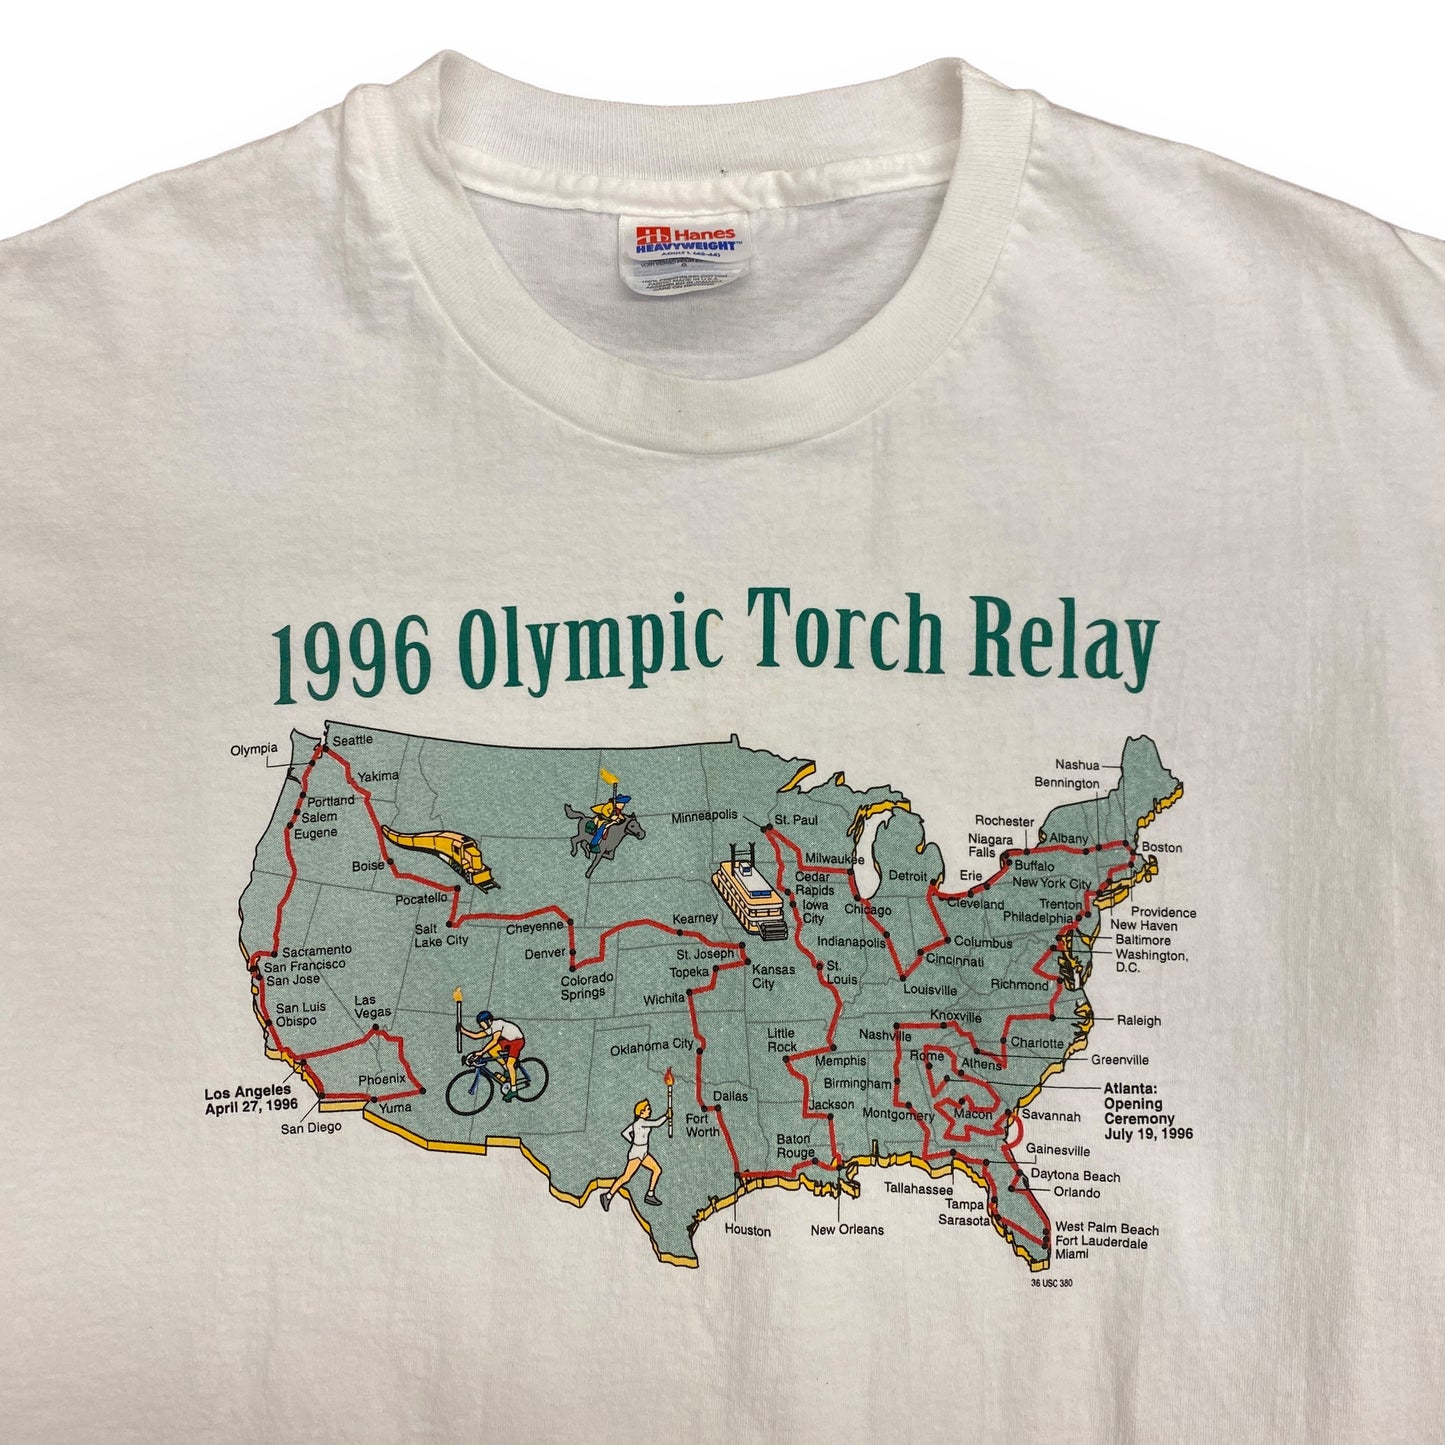 Vintage 1996 Atlanta Olympics Torch Relay Tee - Size Large